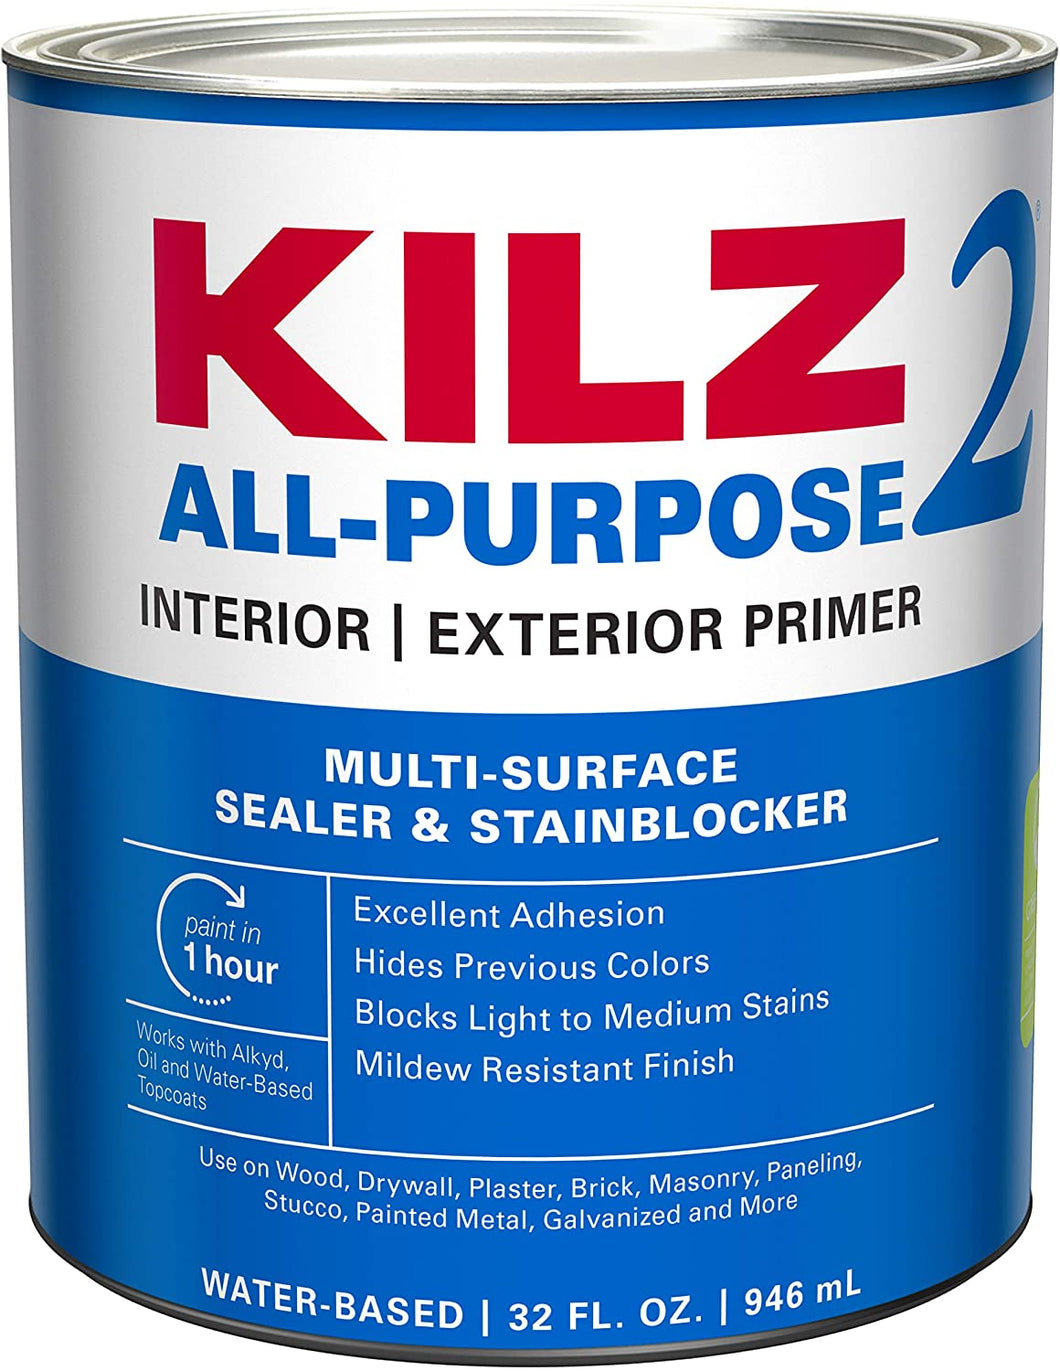 KILZ 2 Multi-Surface Stain Blocking Interior/Exterior Latex Primer/Sealer